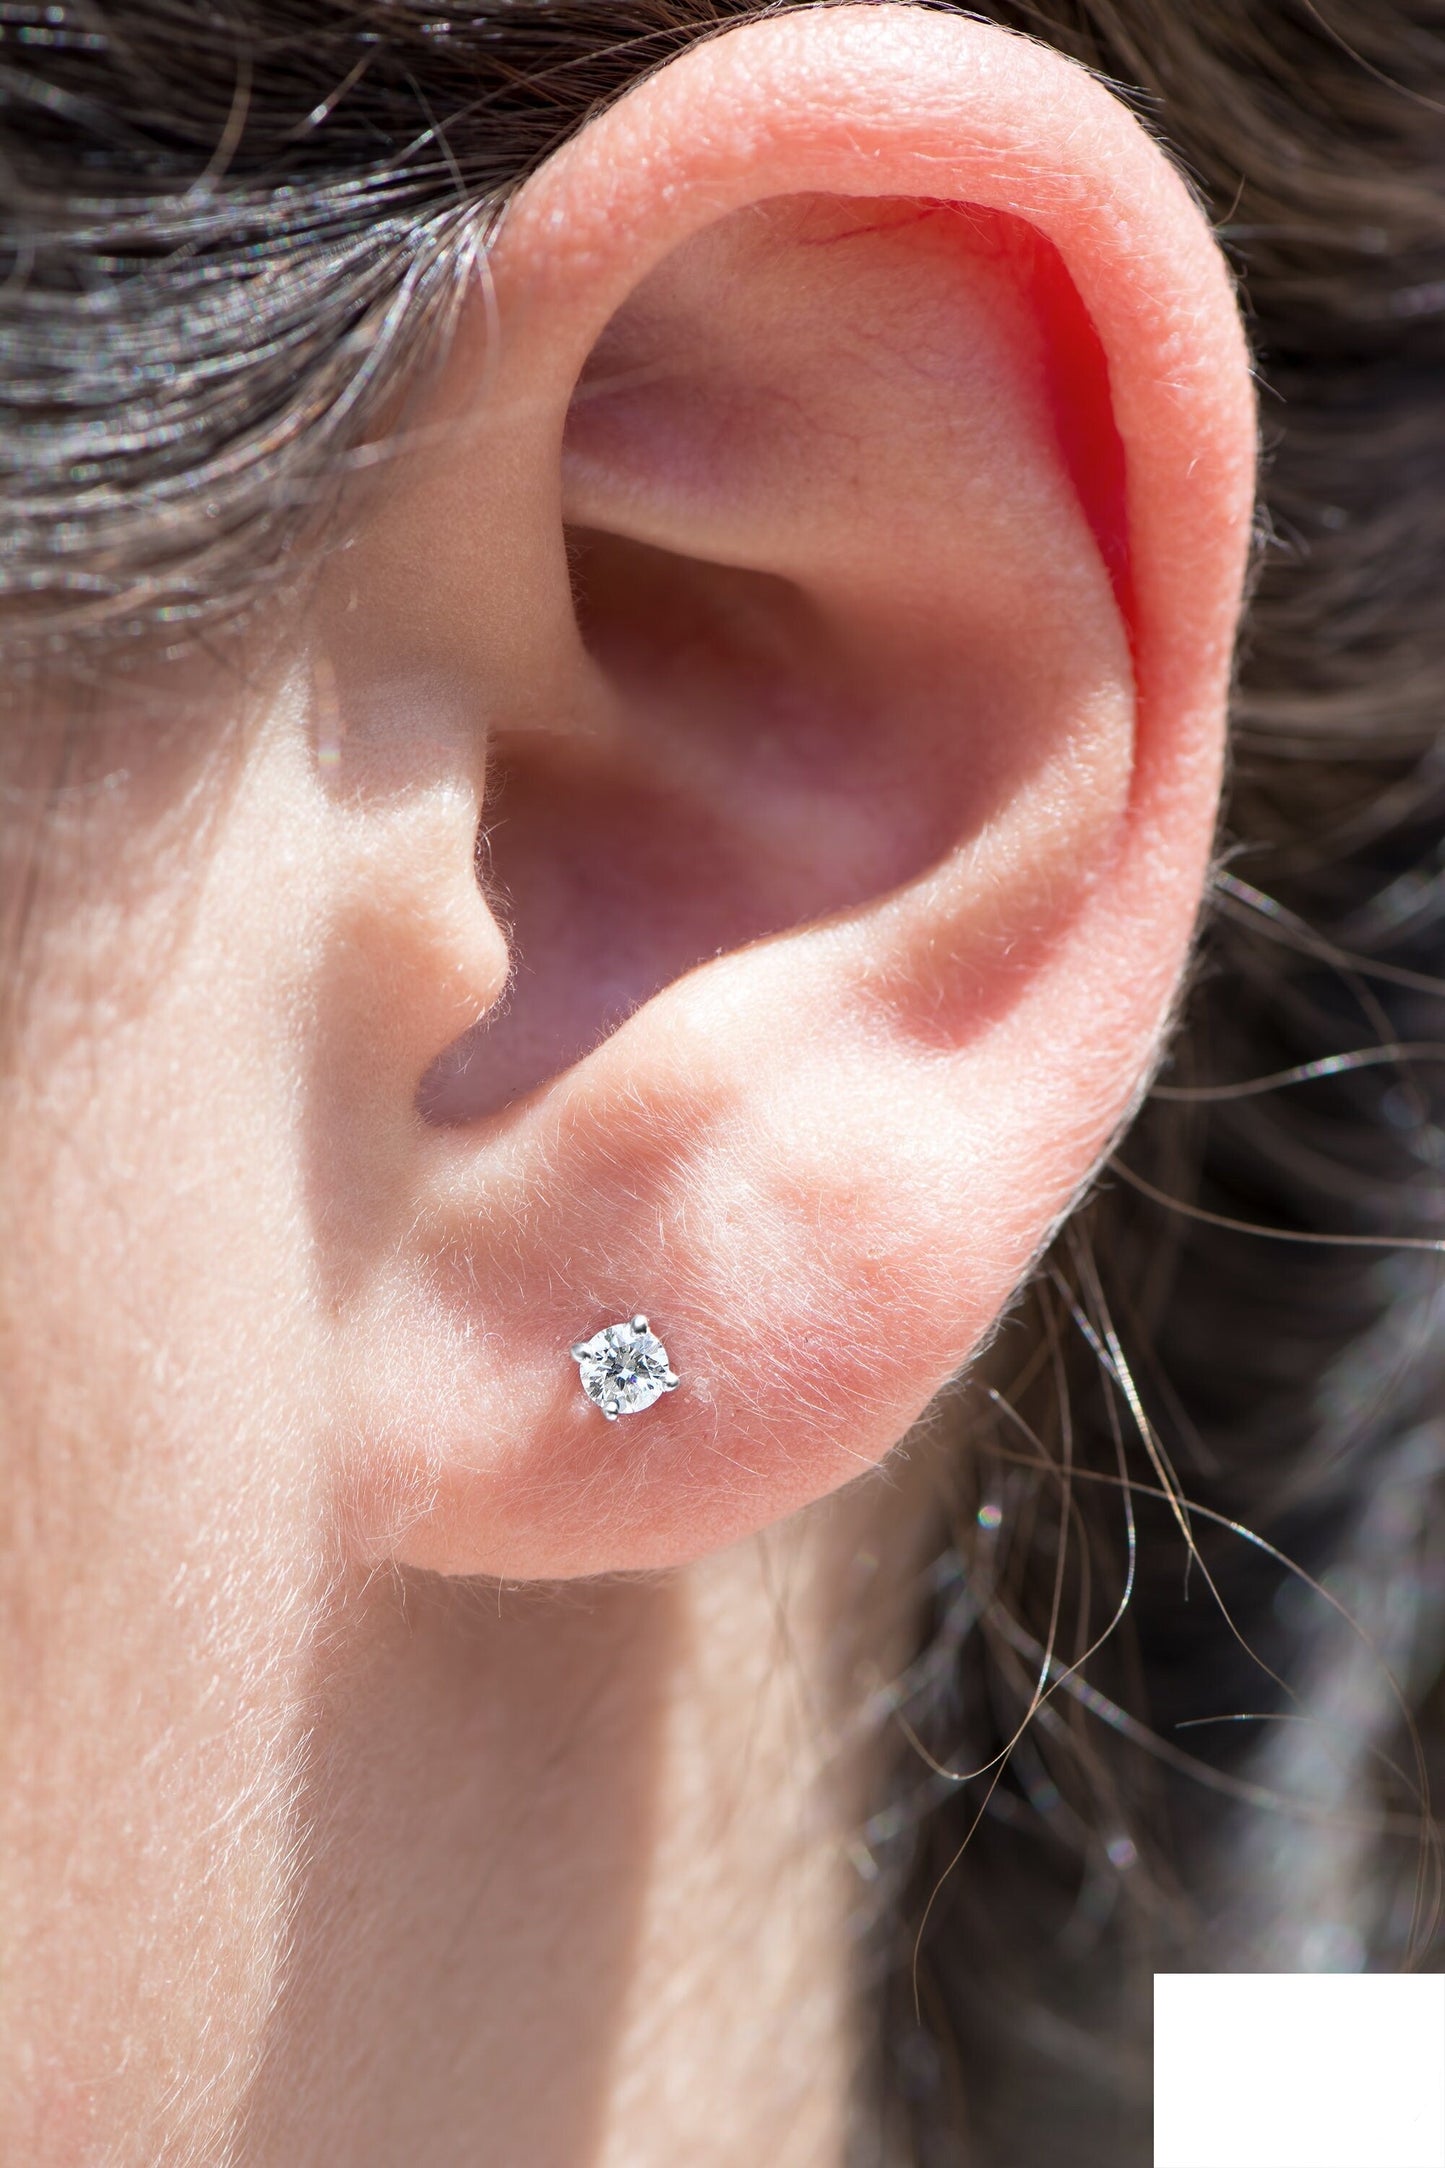 14k Gold Diamond Stud Earrings 0.25ct.